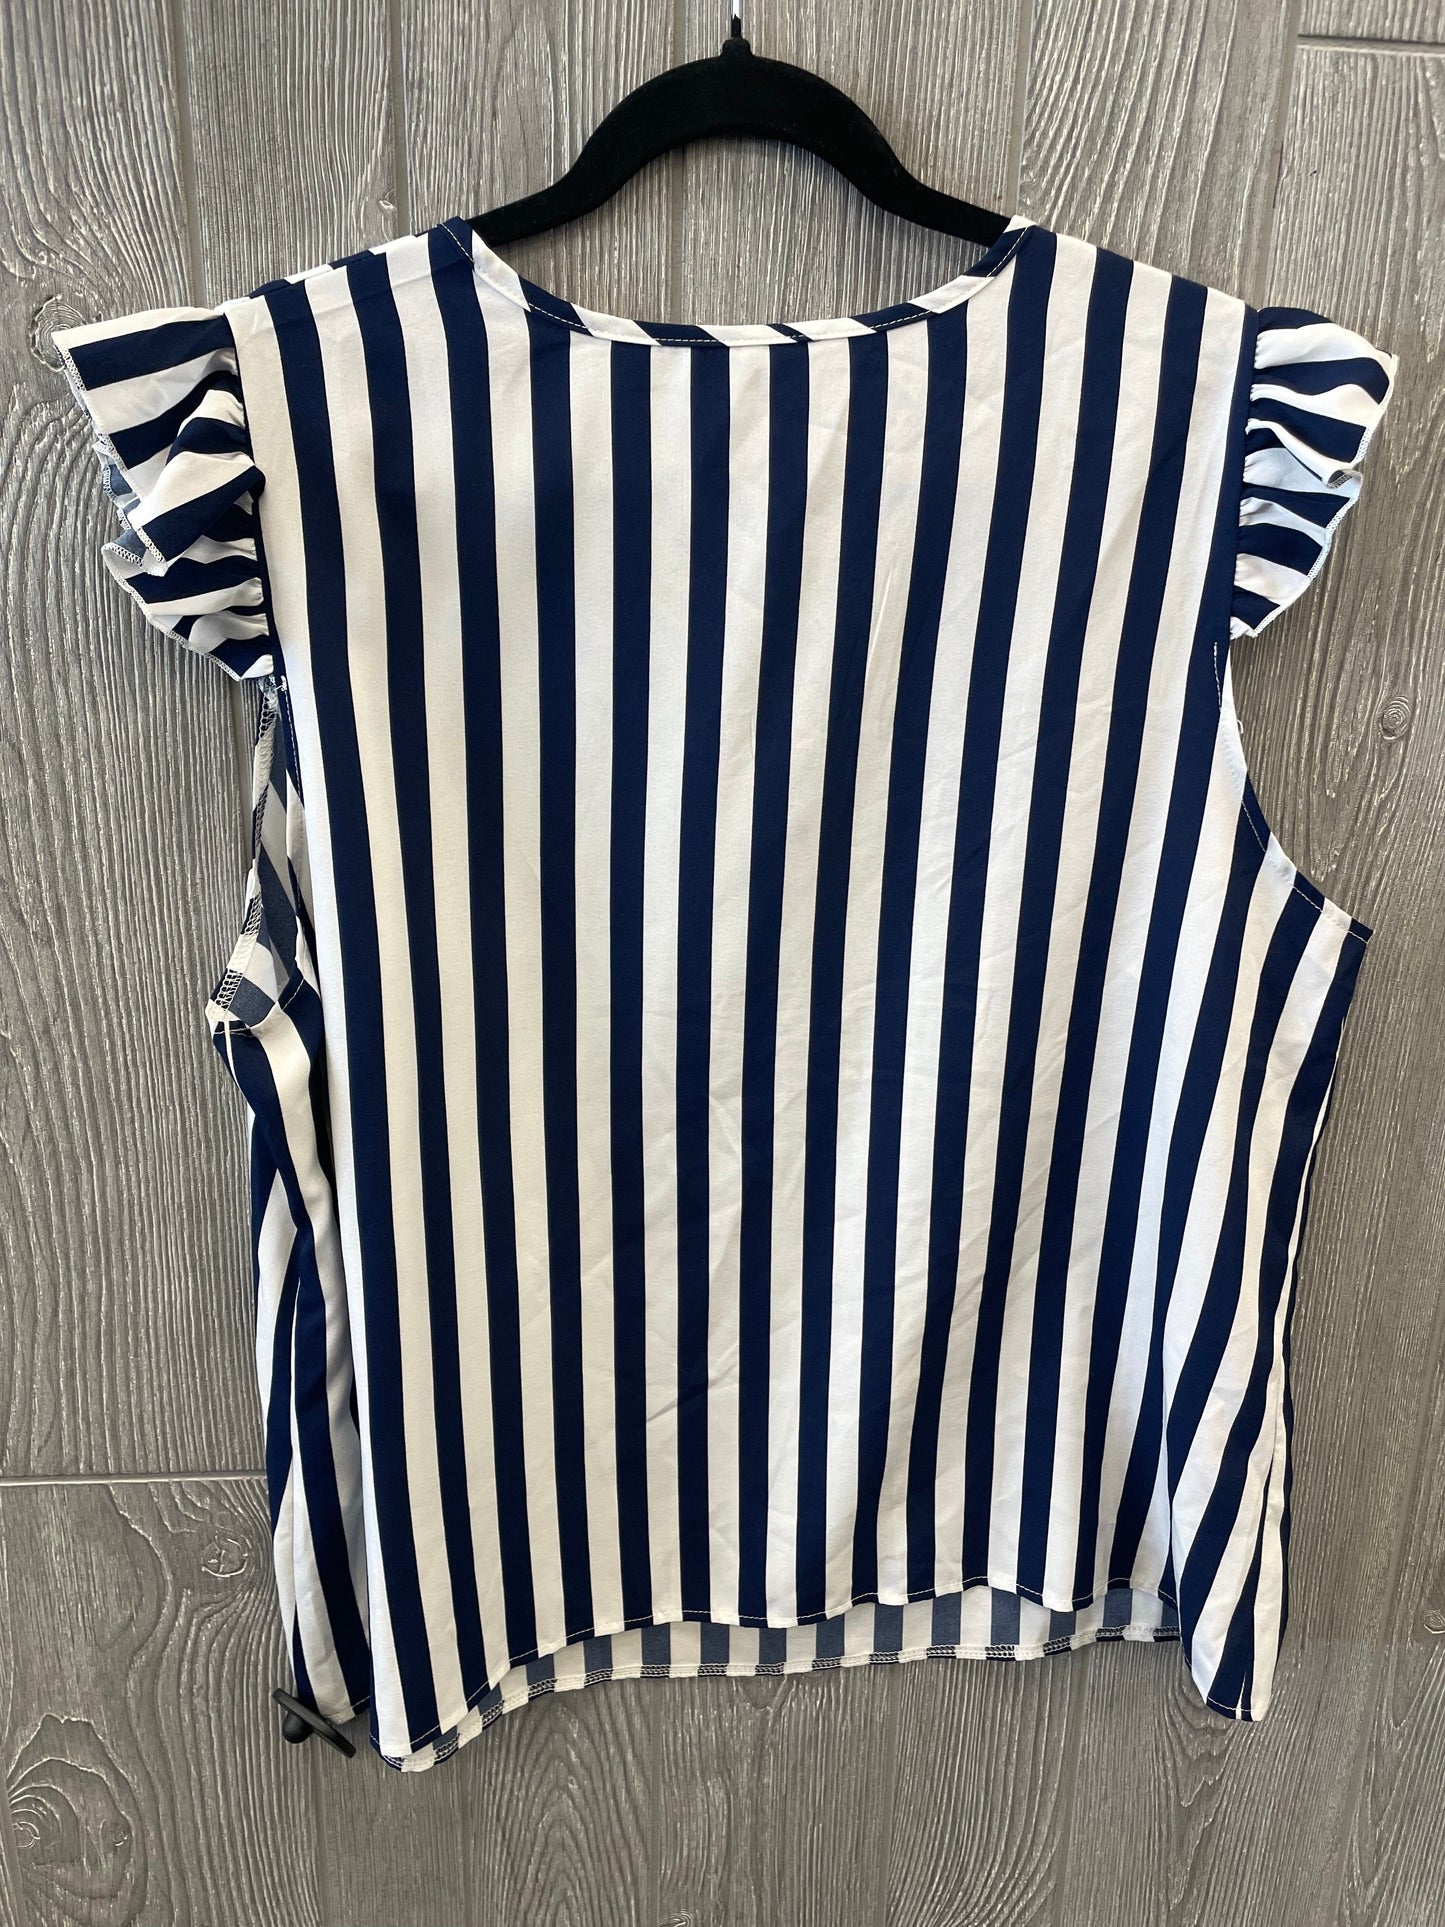 Striped Pattern Top Short Sleeve Shein, Size 2x